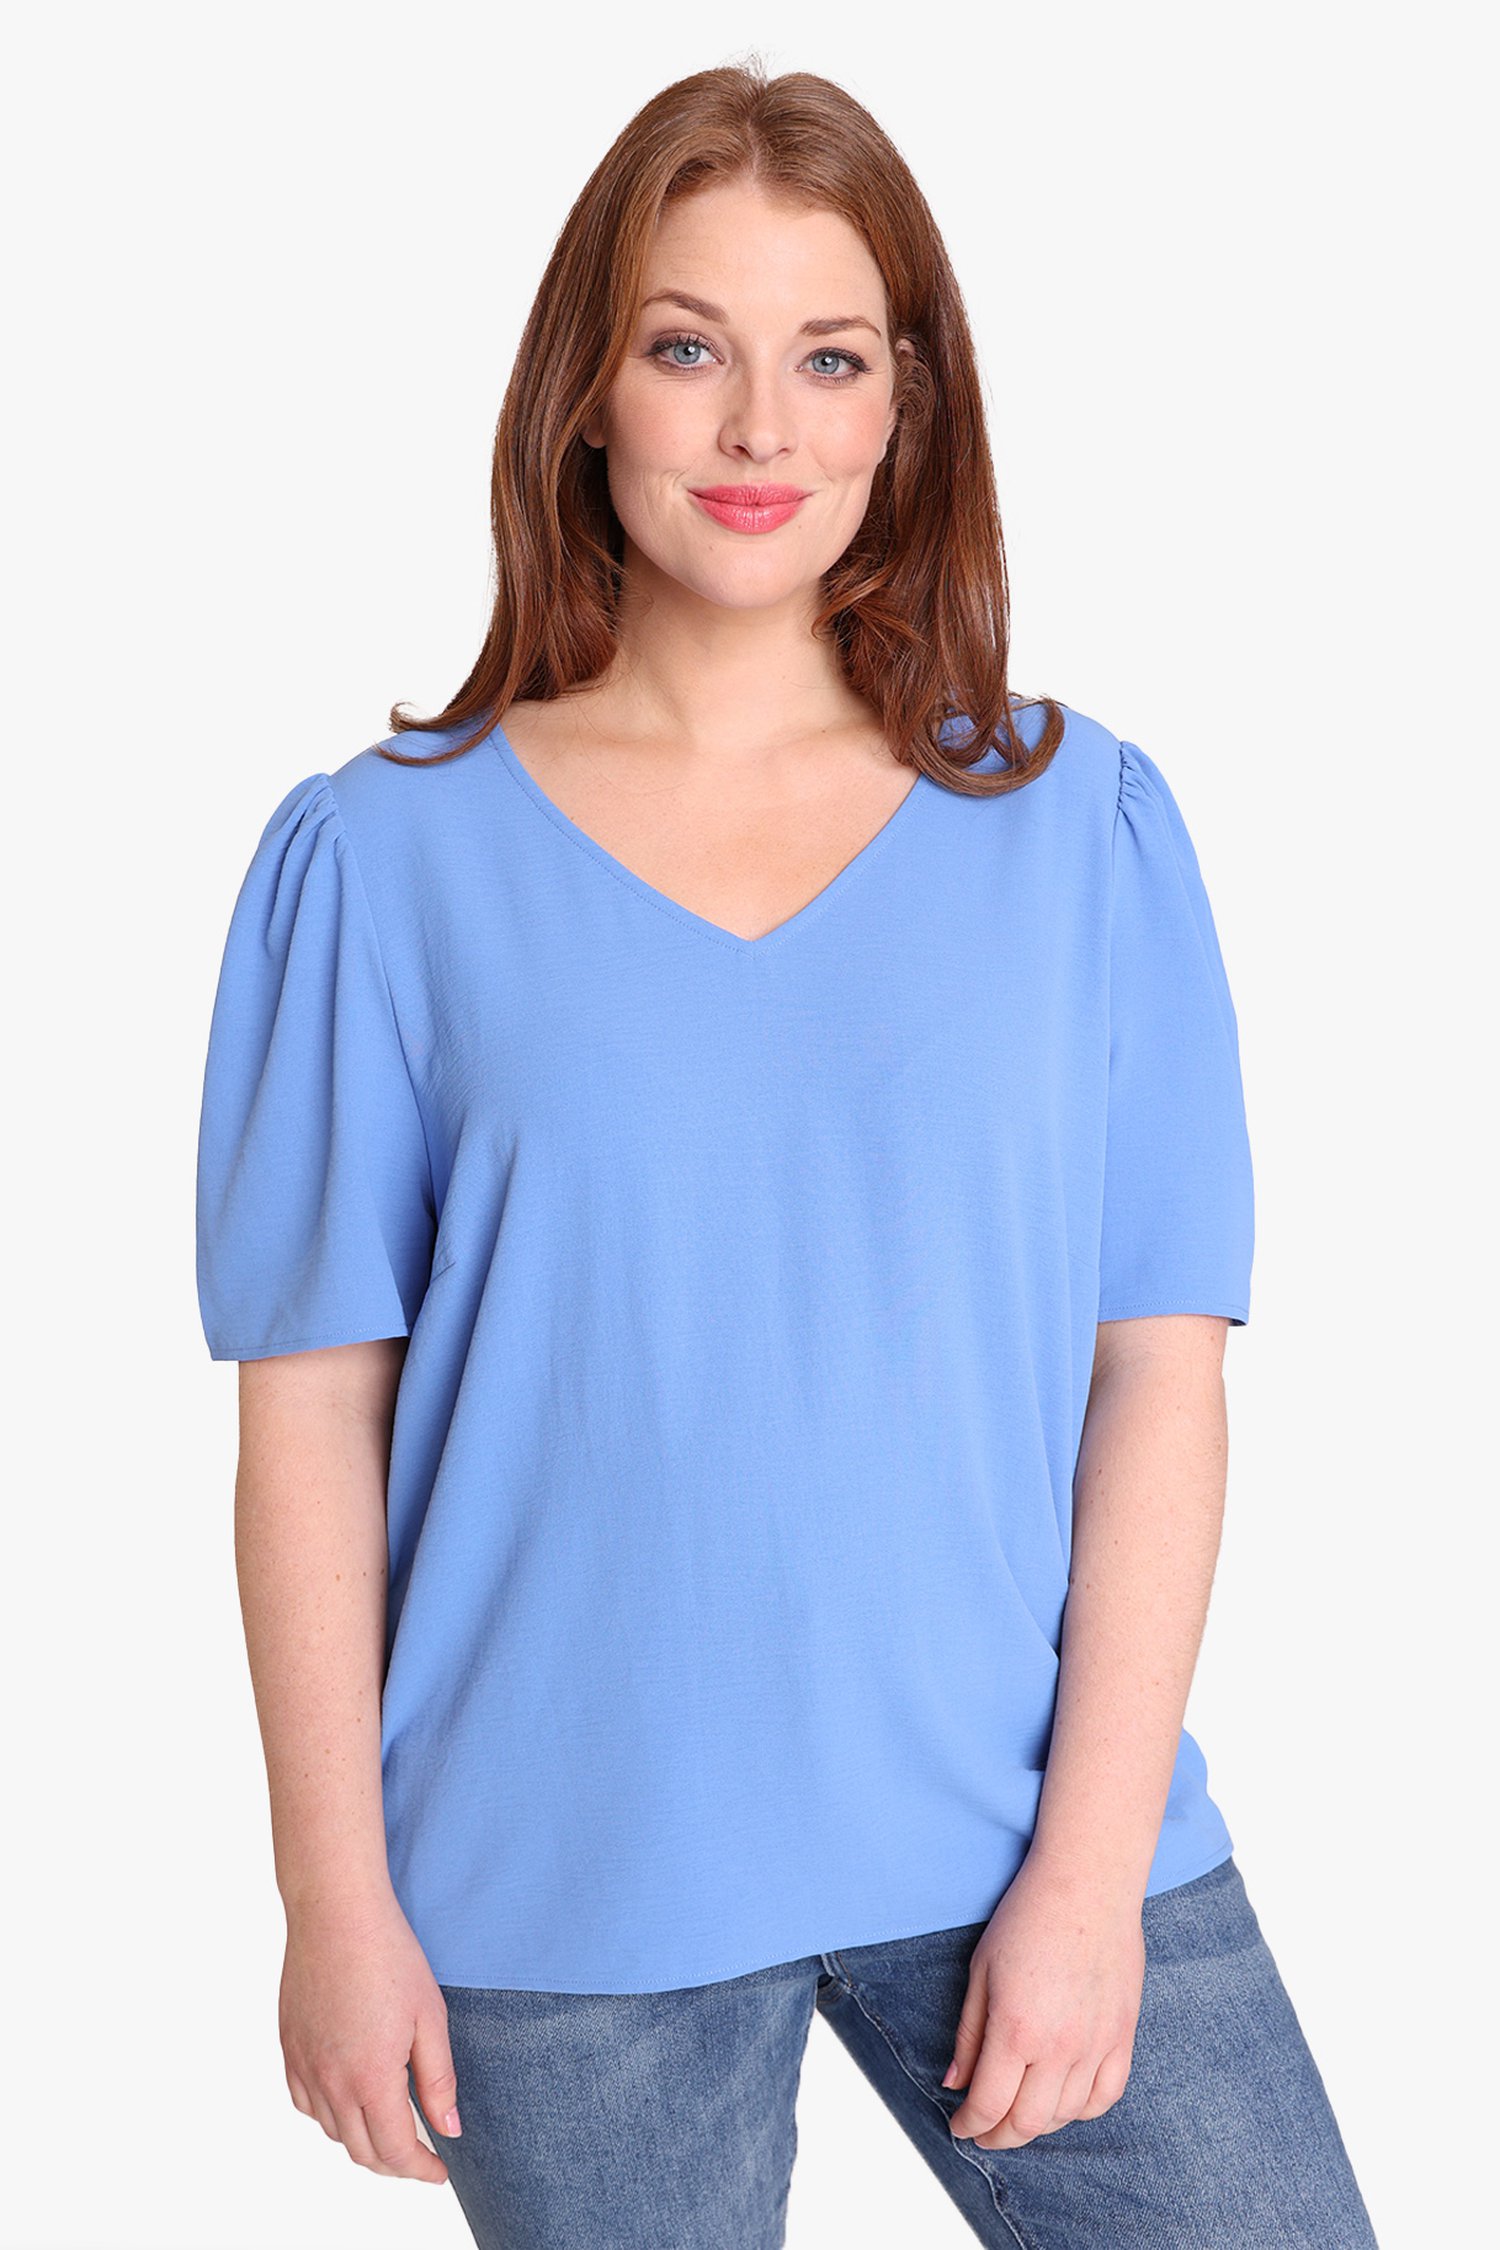 fascisme Vertellen Lelie Lichtblauwe blouse met pofmouwen van Only Carmakoma | 9602996 | e5